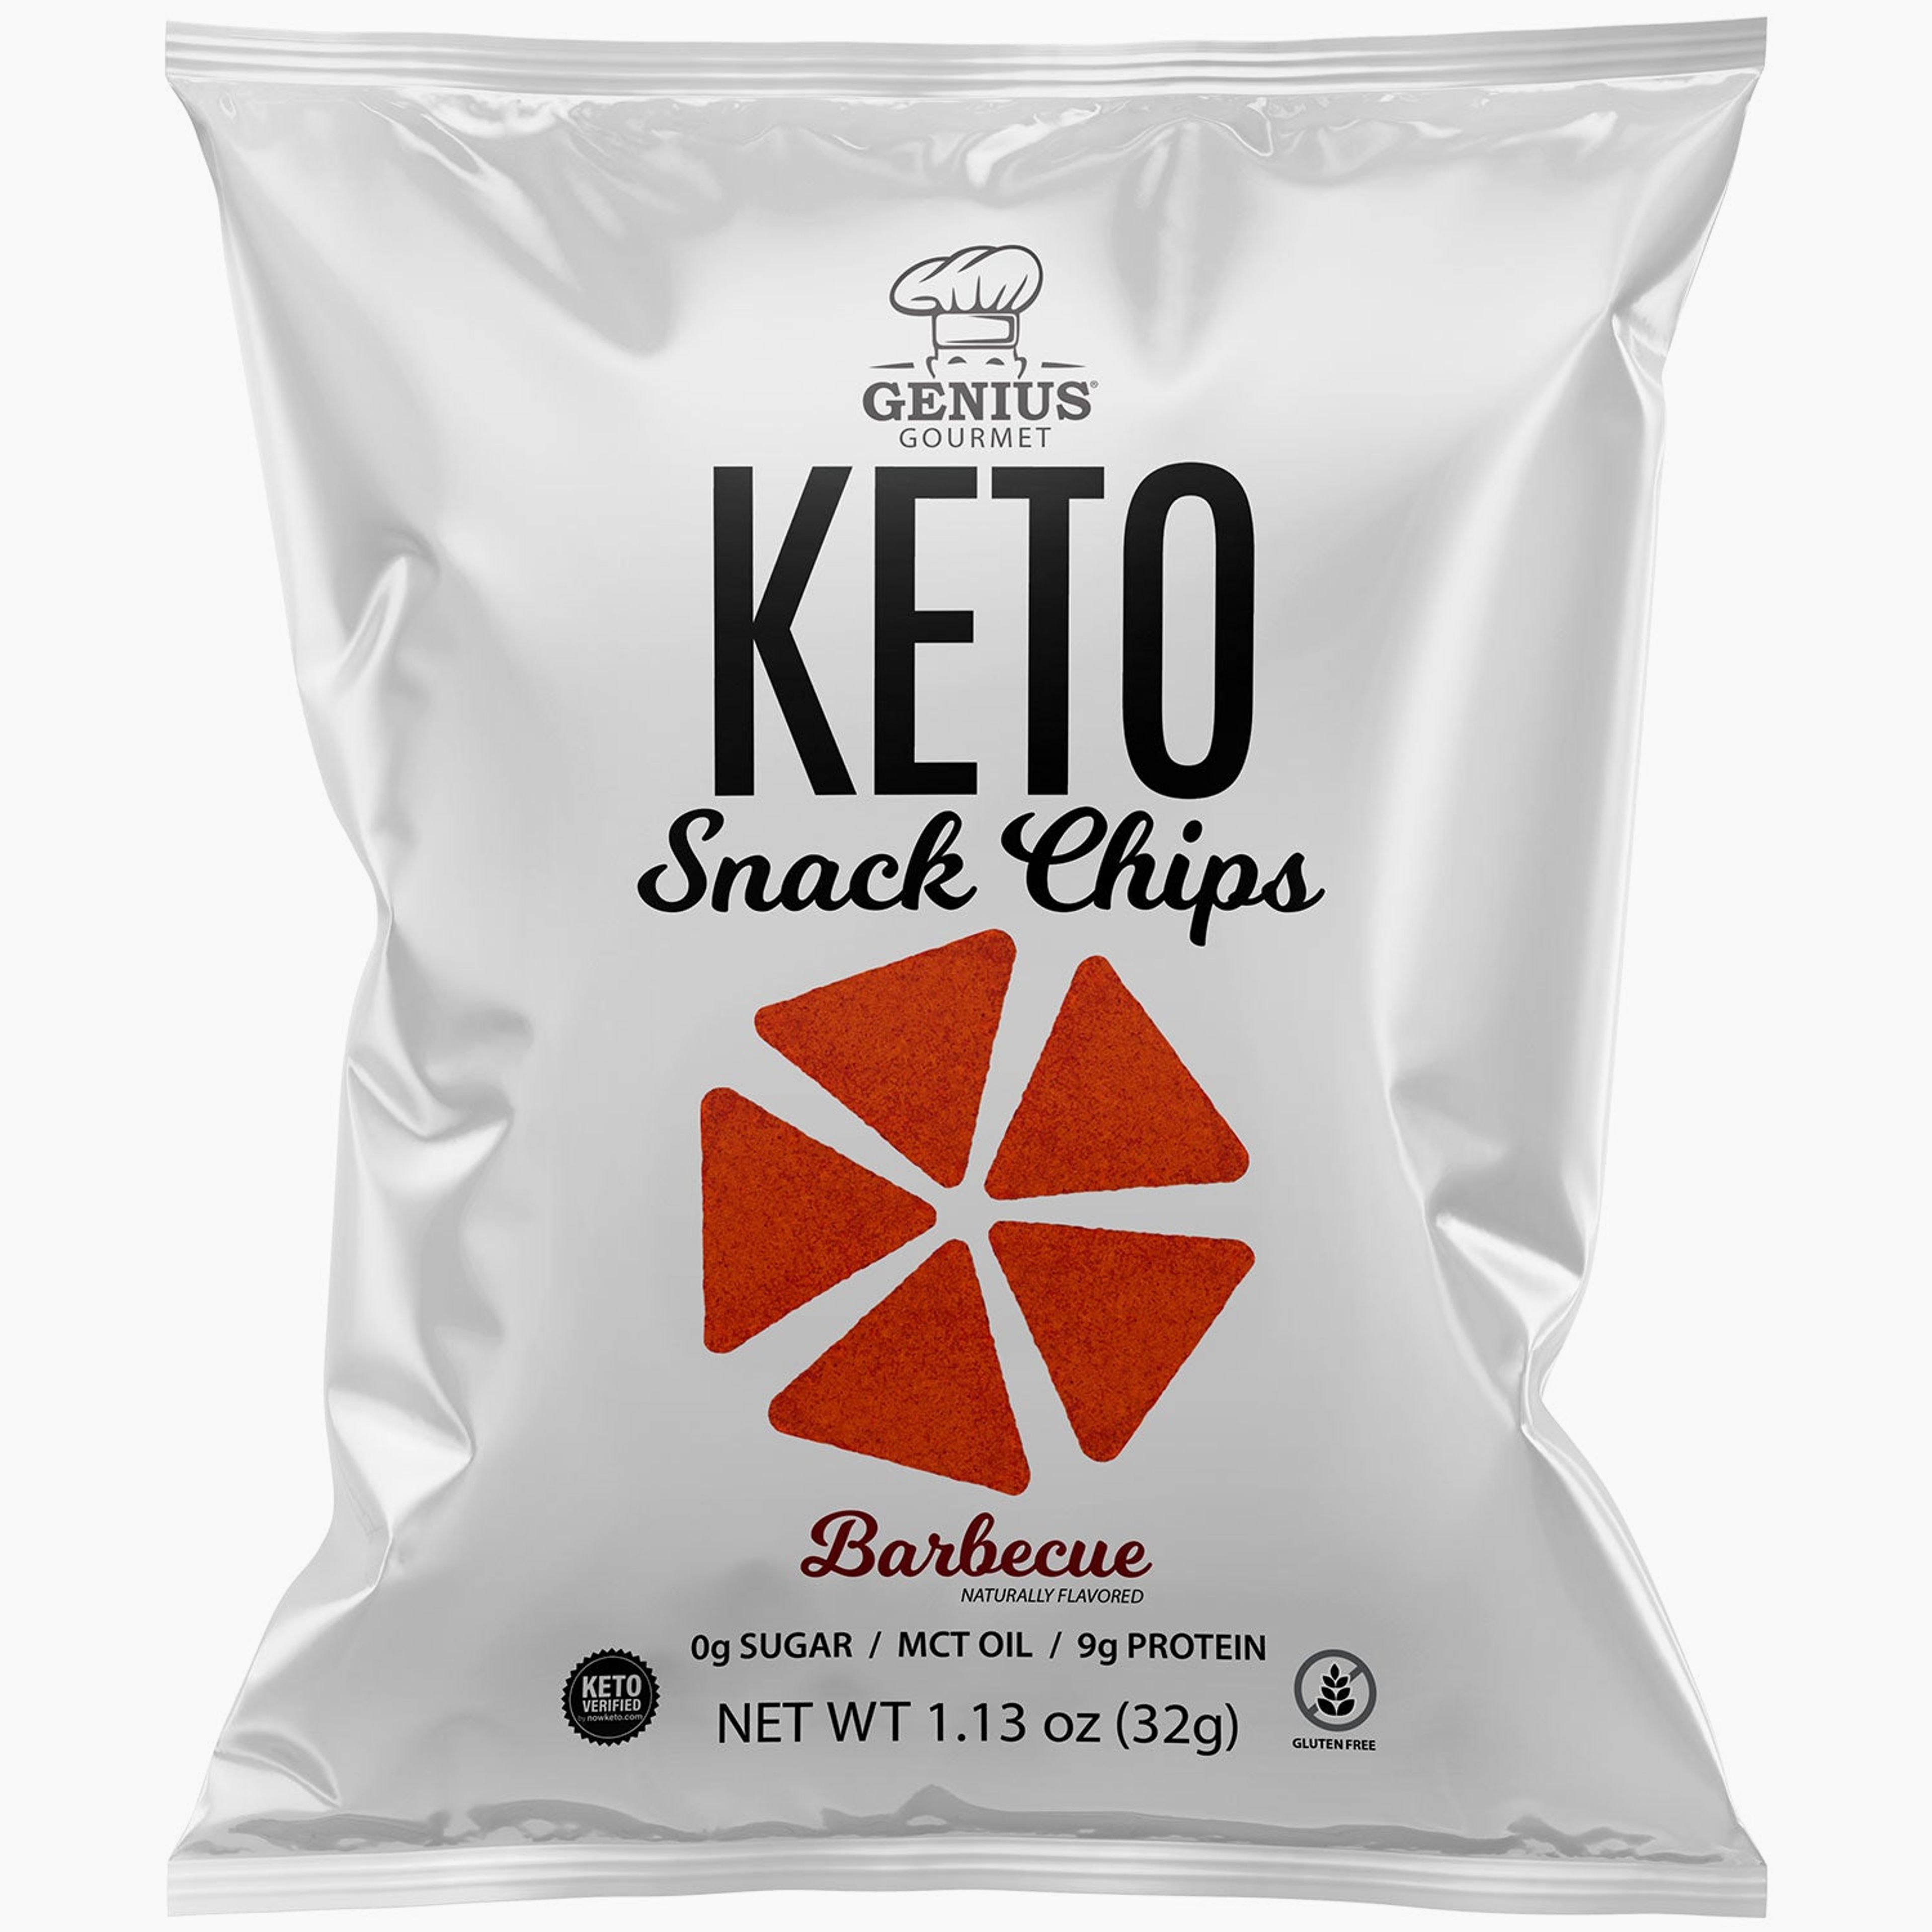 Keto Snack Chips - Barbecue